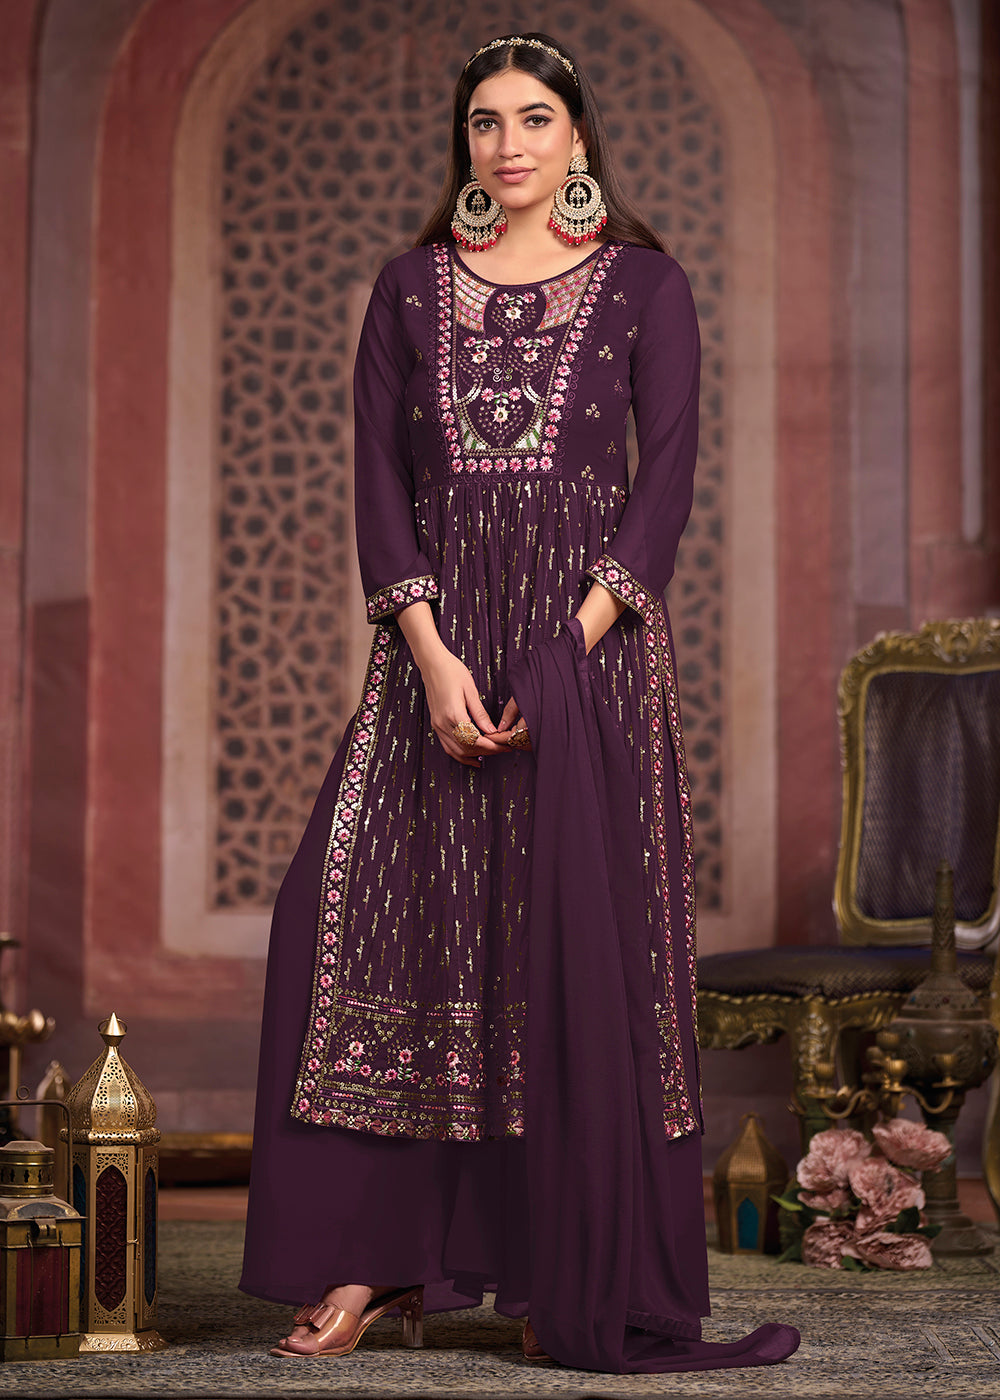 Buy Now Nyra Cut Style Elegant Purple Festive Palazzo Suit Online in USA, UK, Canada, Germany, Australia & Worldwide at Empress Clothing.